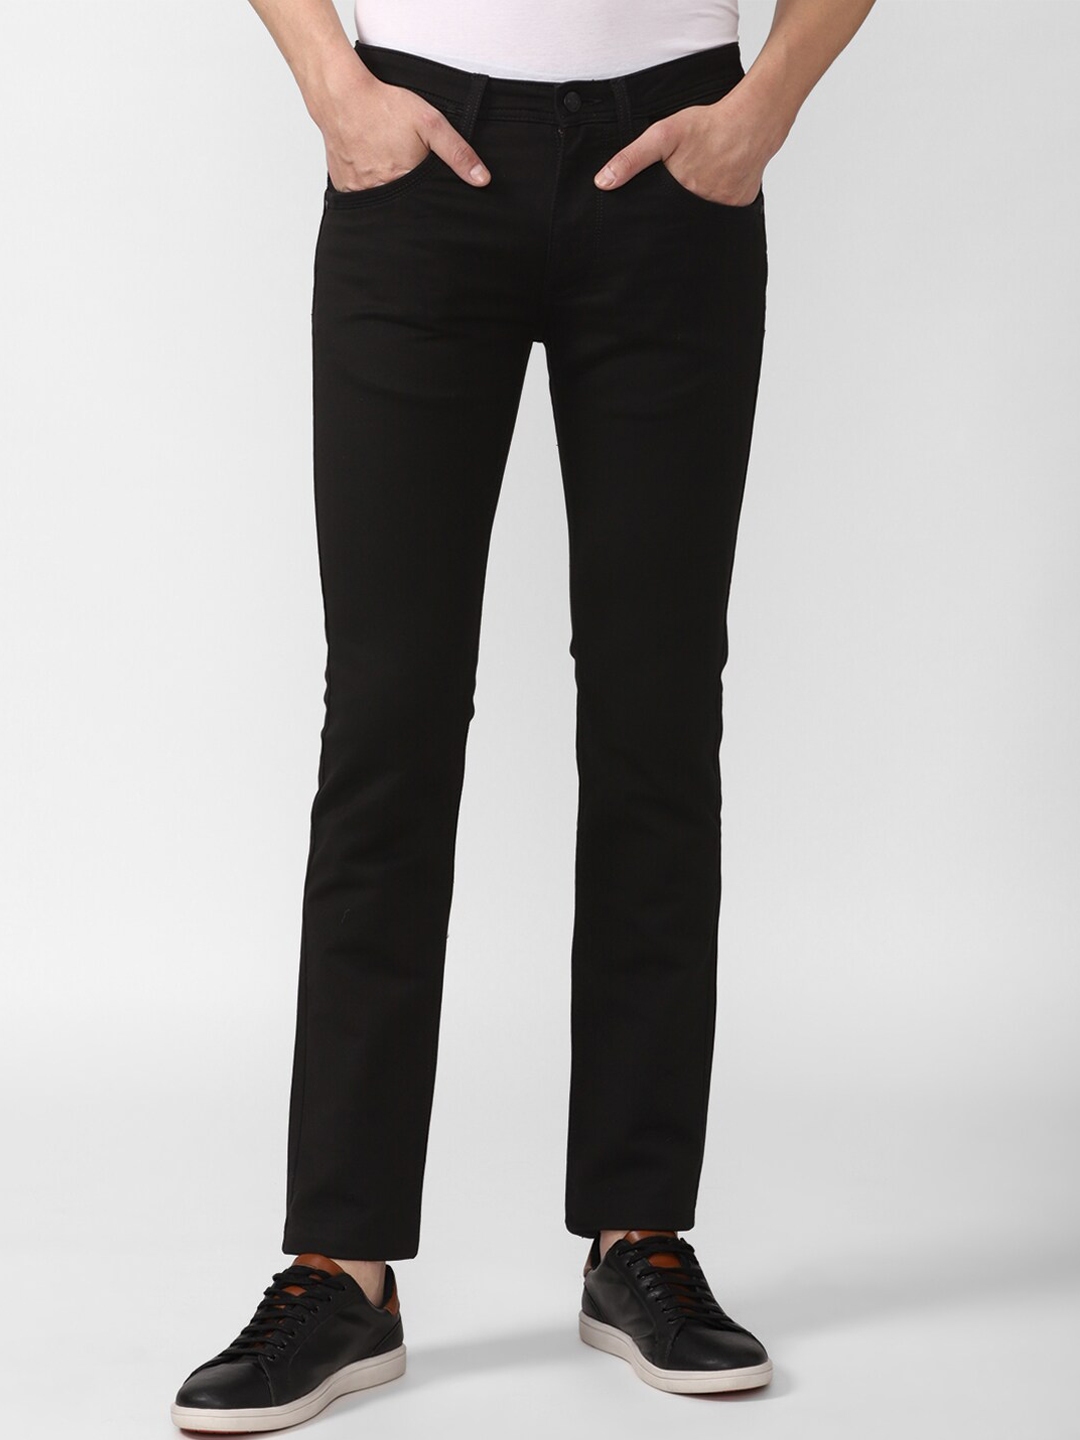 Jeans & Pants, Van Heusen Pop Fit Denim Jeans Flawless